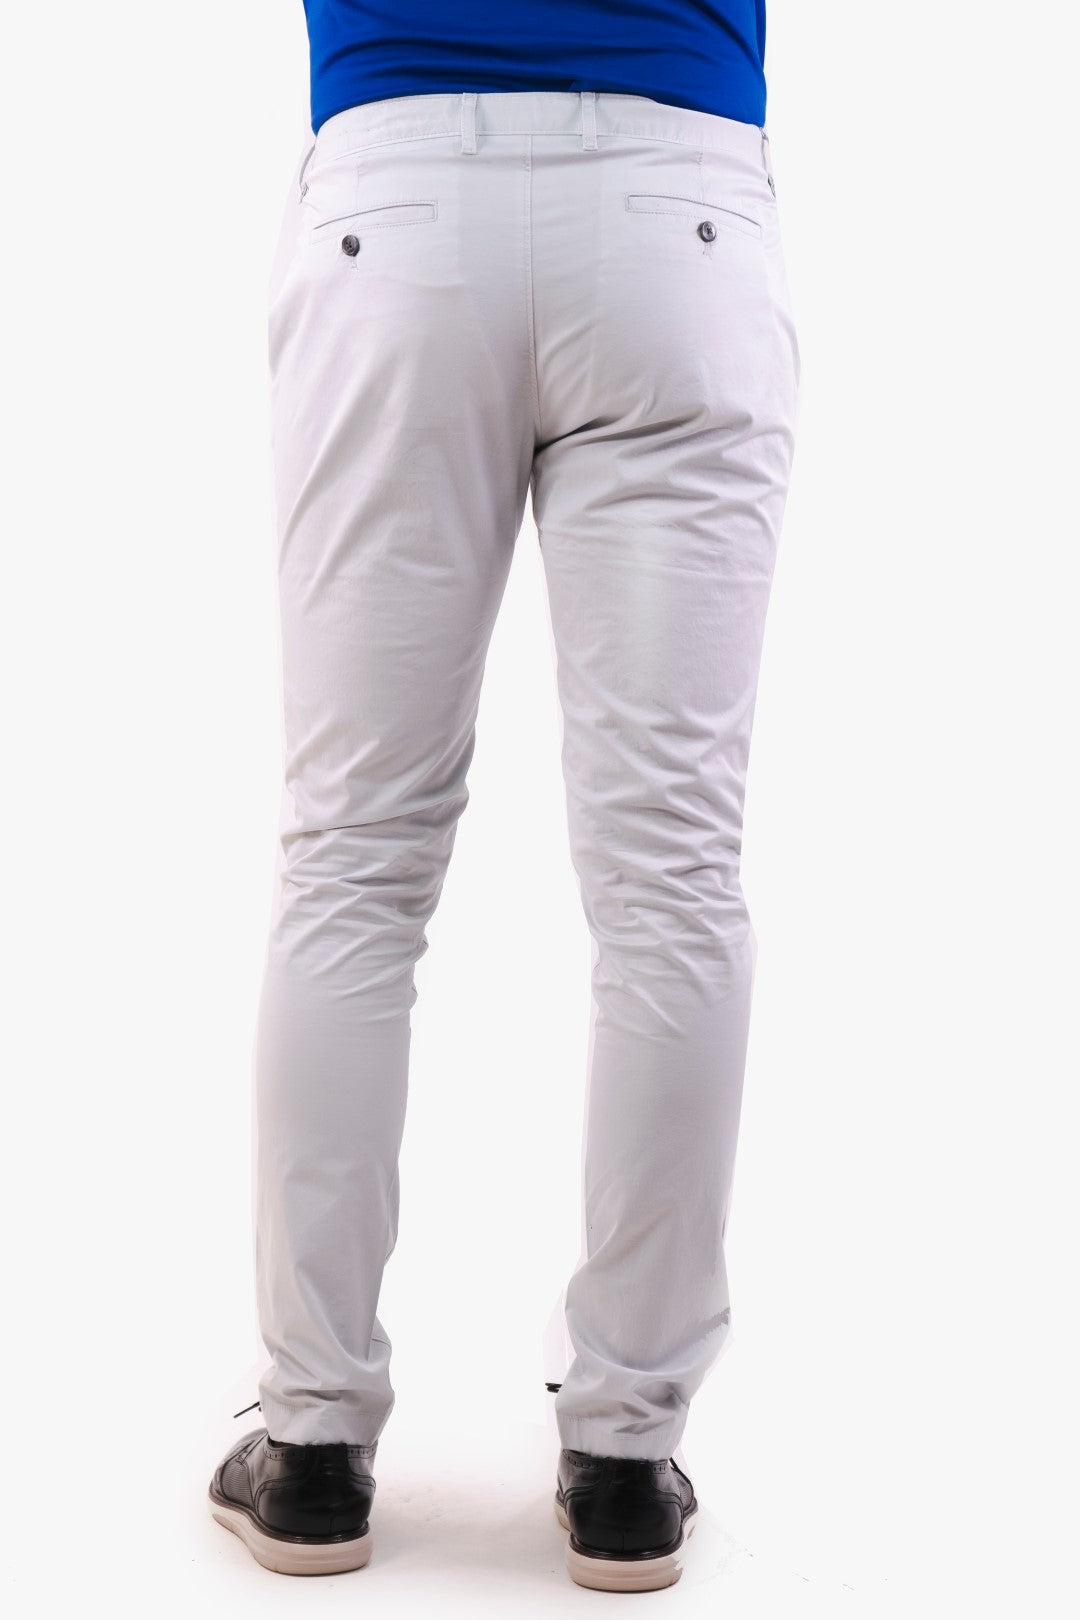 Michael Kors pants in Pale Gray color